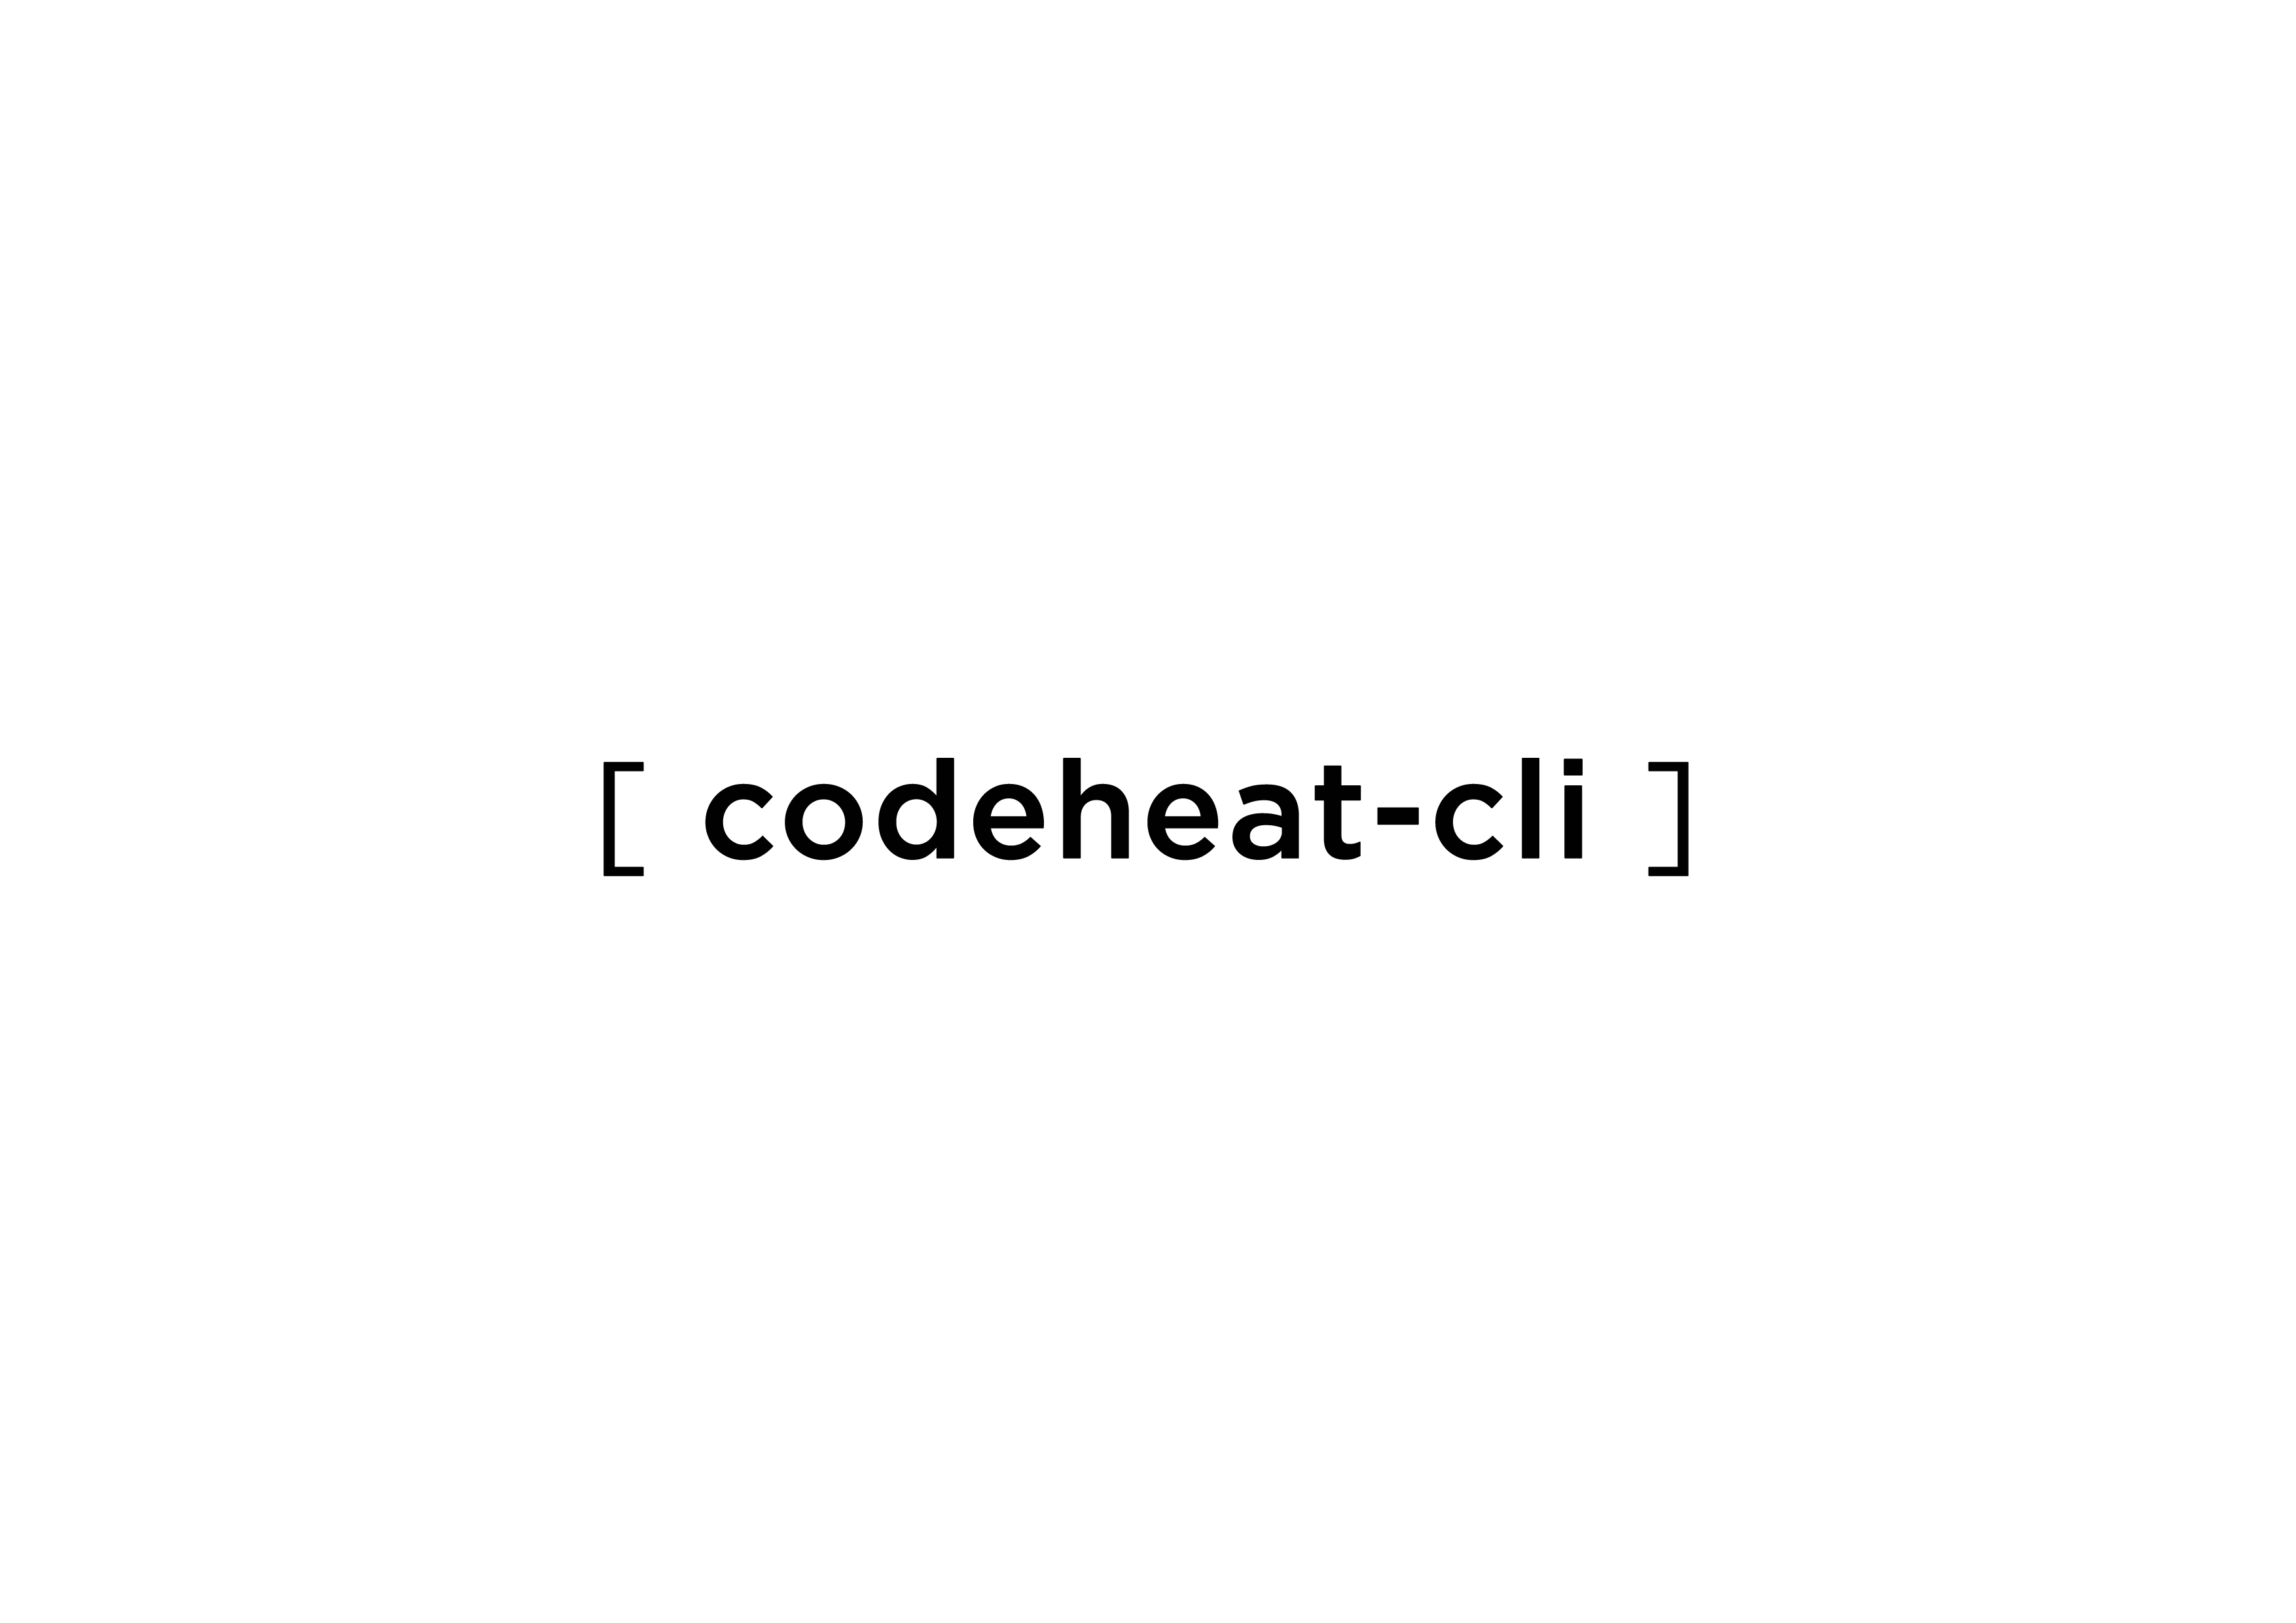 Codeheat-CLI Project